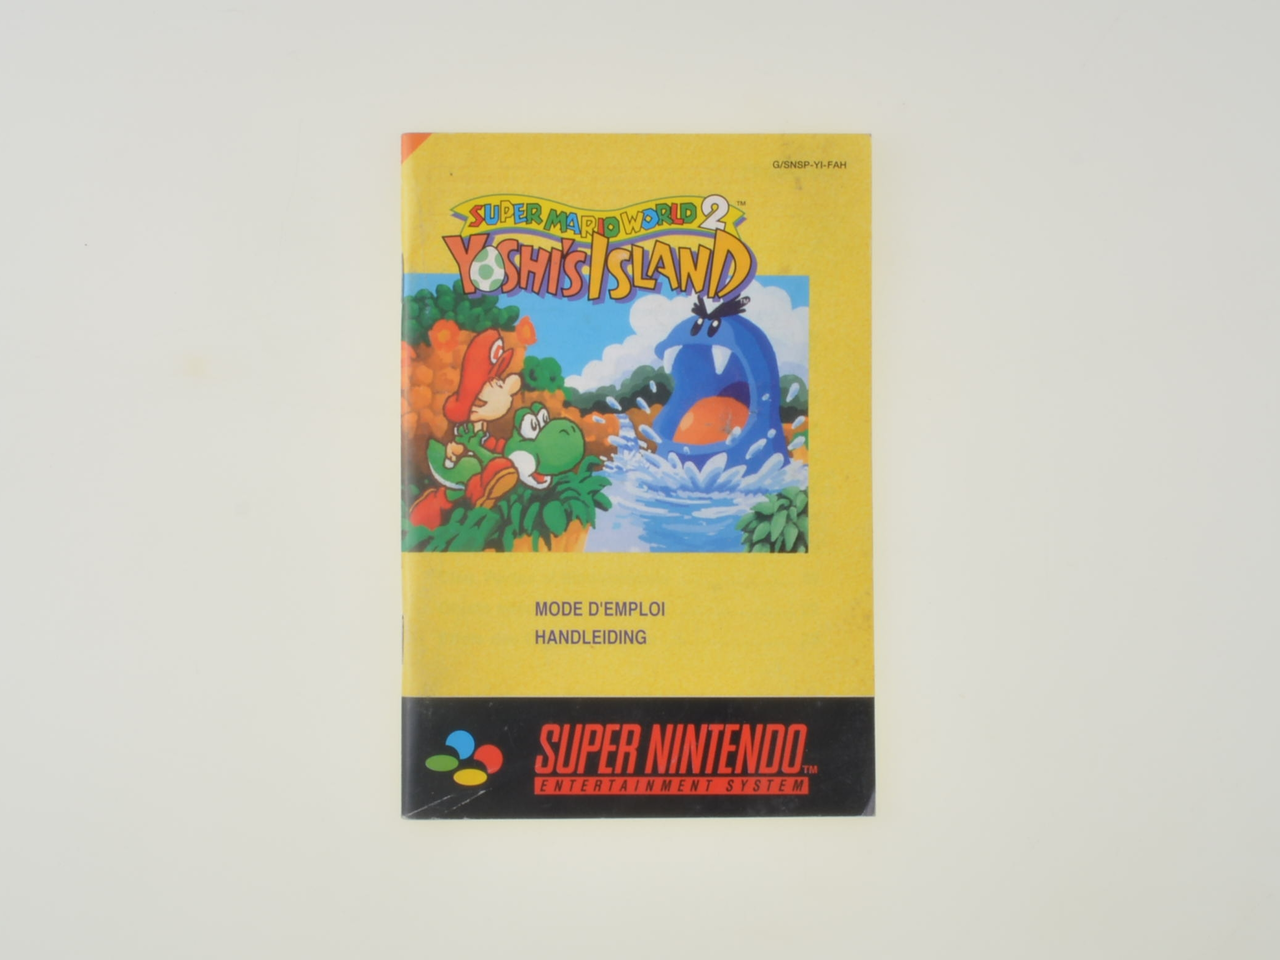 Super Mario World 2 - Yoshi's Island - Manual Kopen | Super Nintendo Manuals